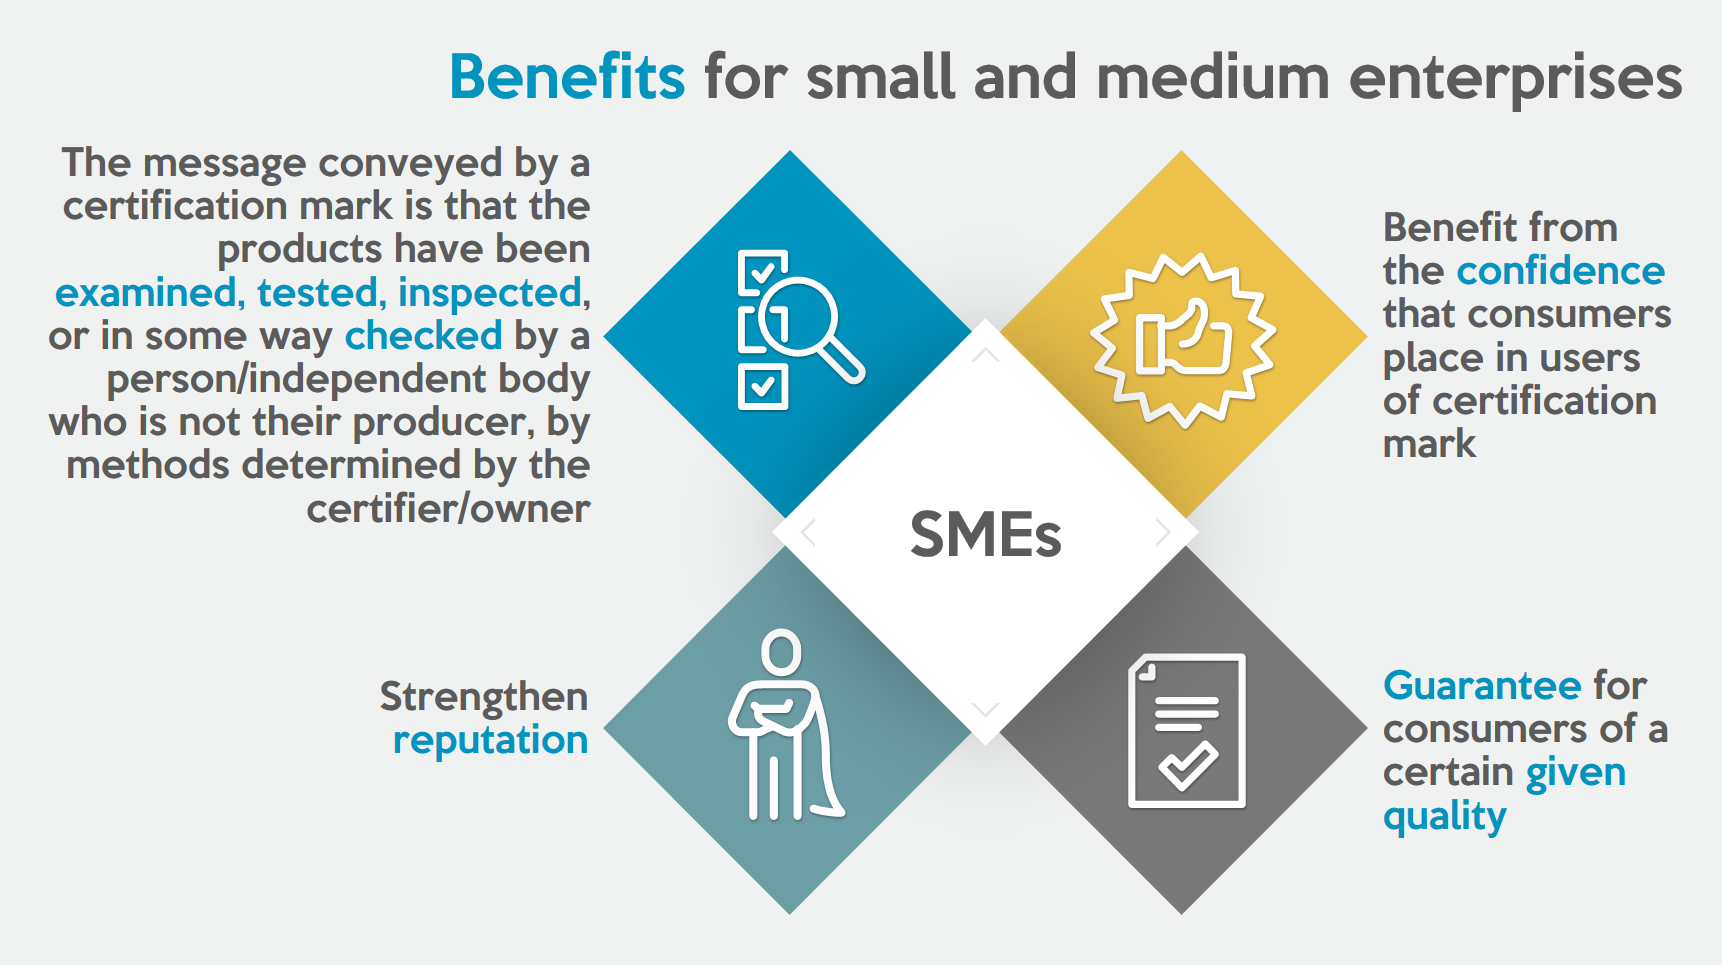 Certification mark SMEs